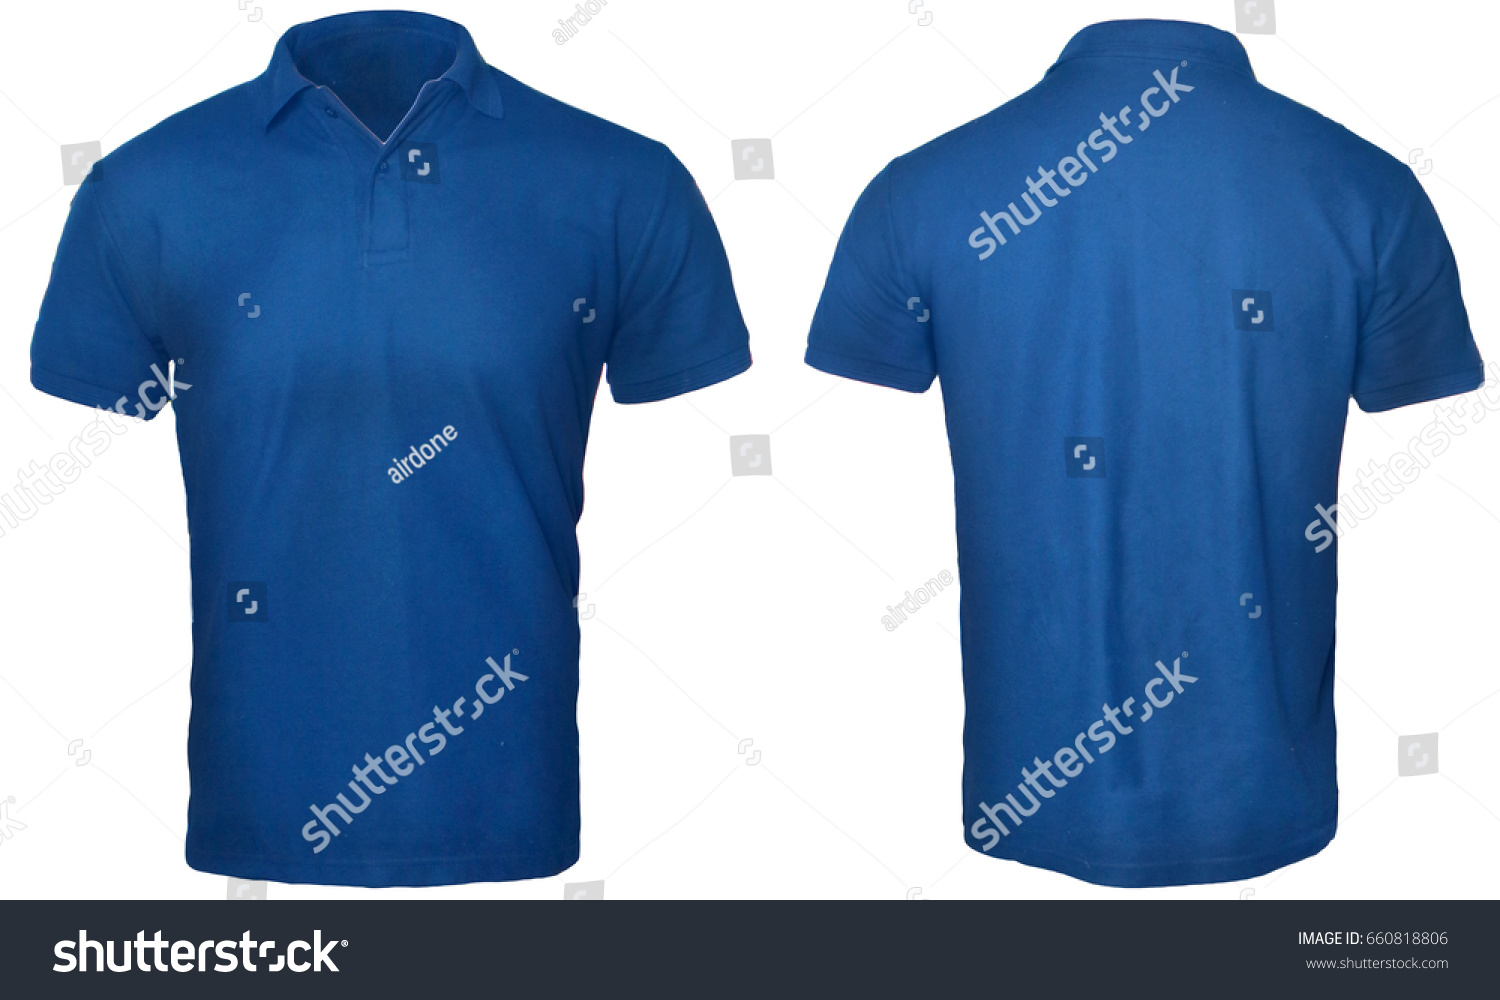 1,713 Men blue polo shirt mockup Images, Stock Photos & Vectors ...